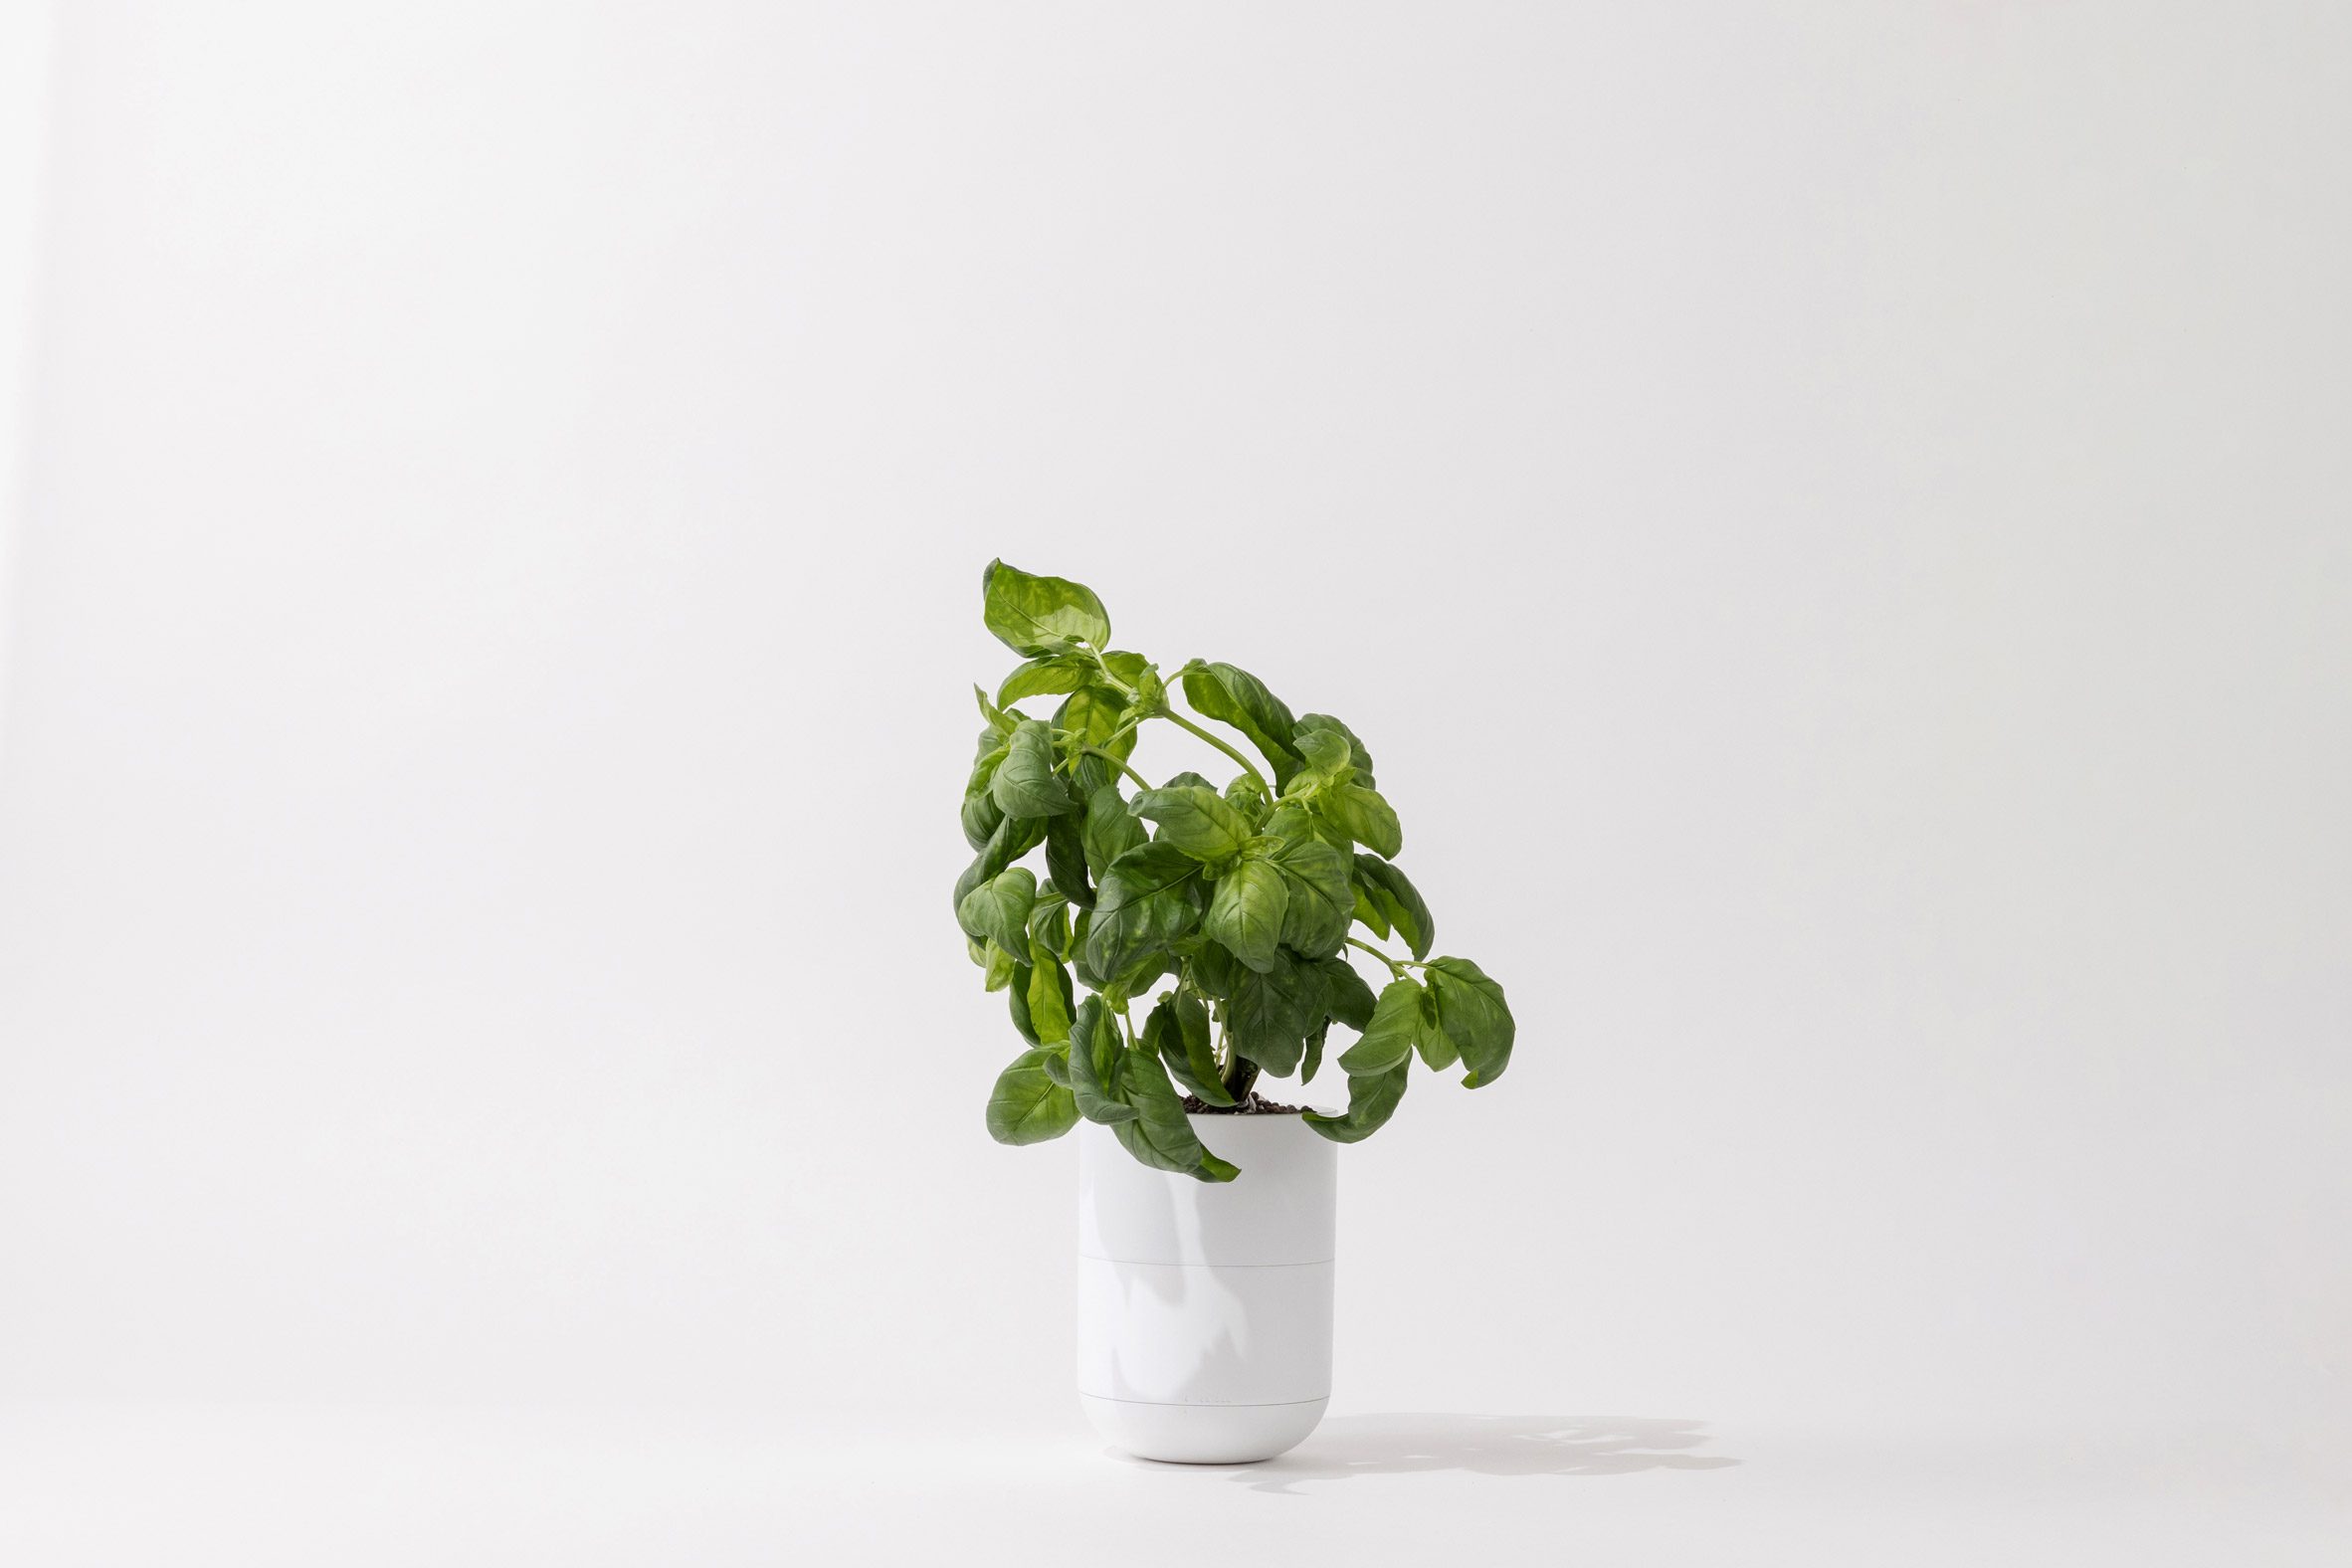 Grow Lamp's self-watering planter